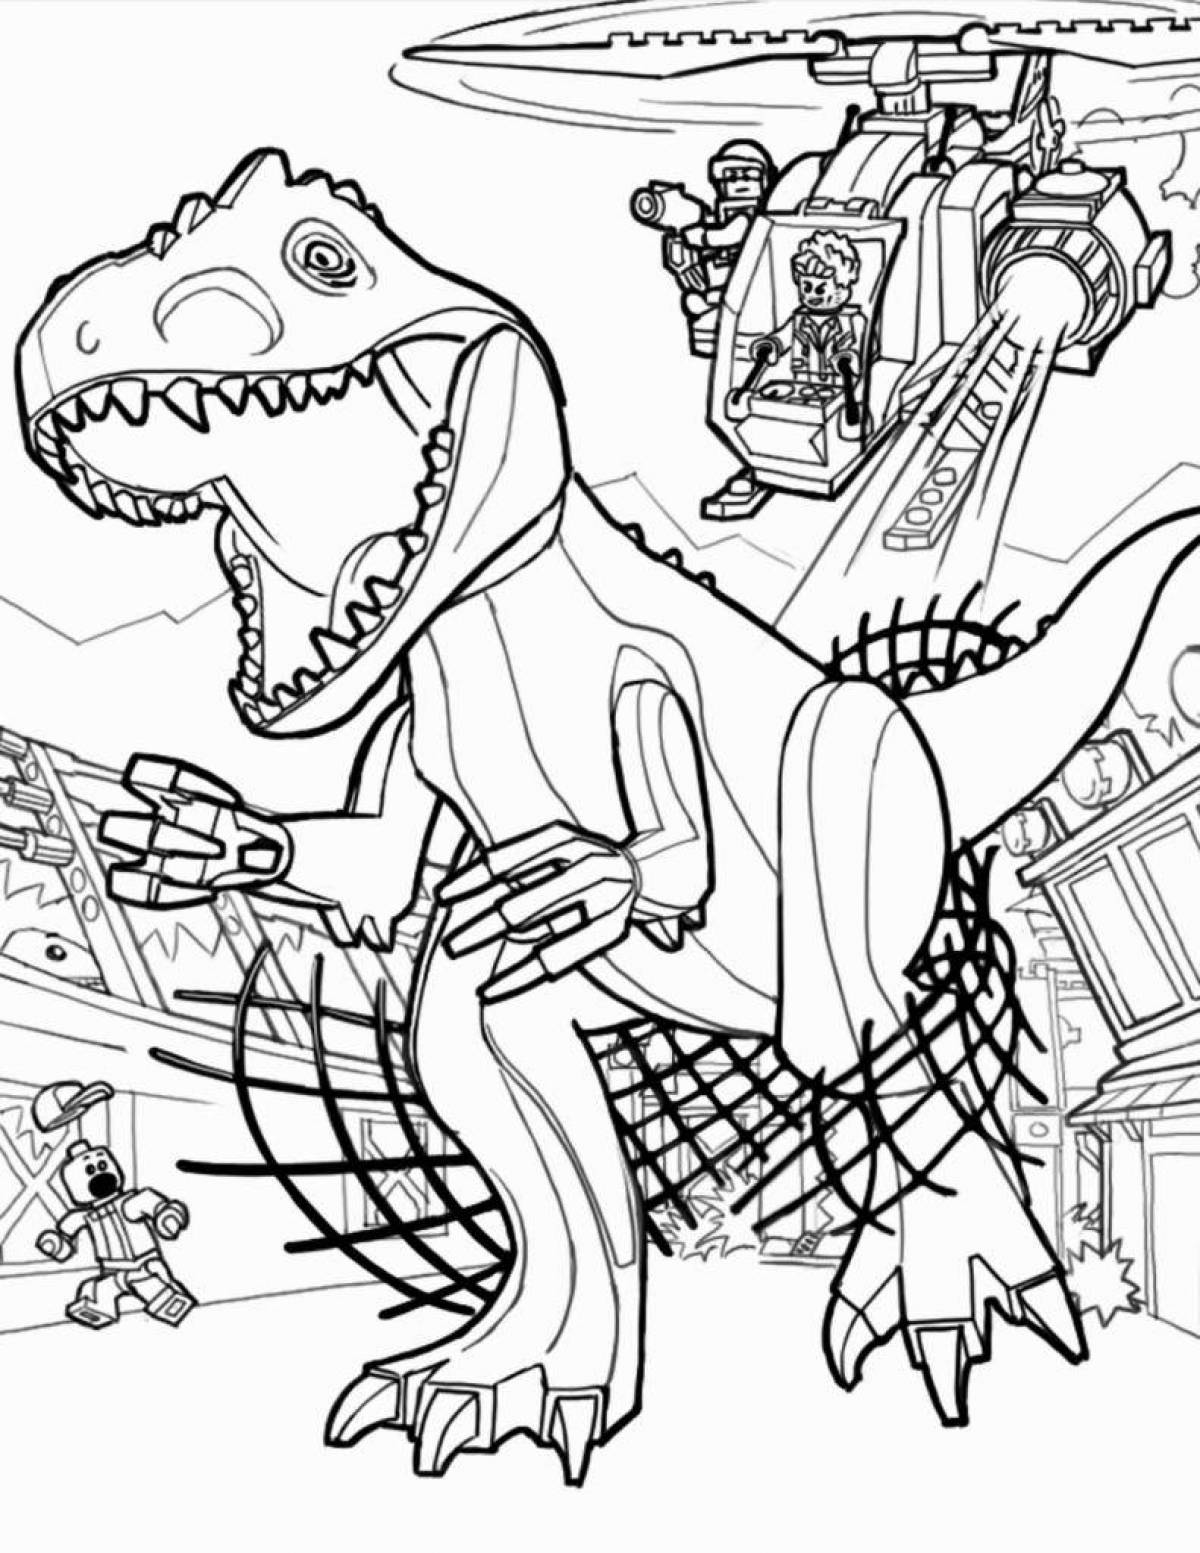 Fun Jurassic world coloring book